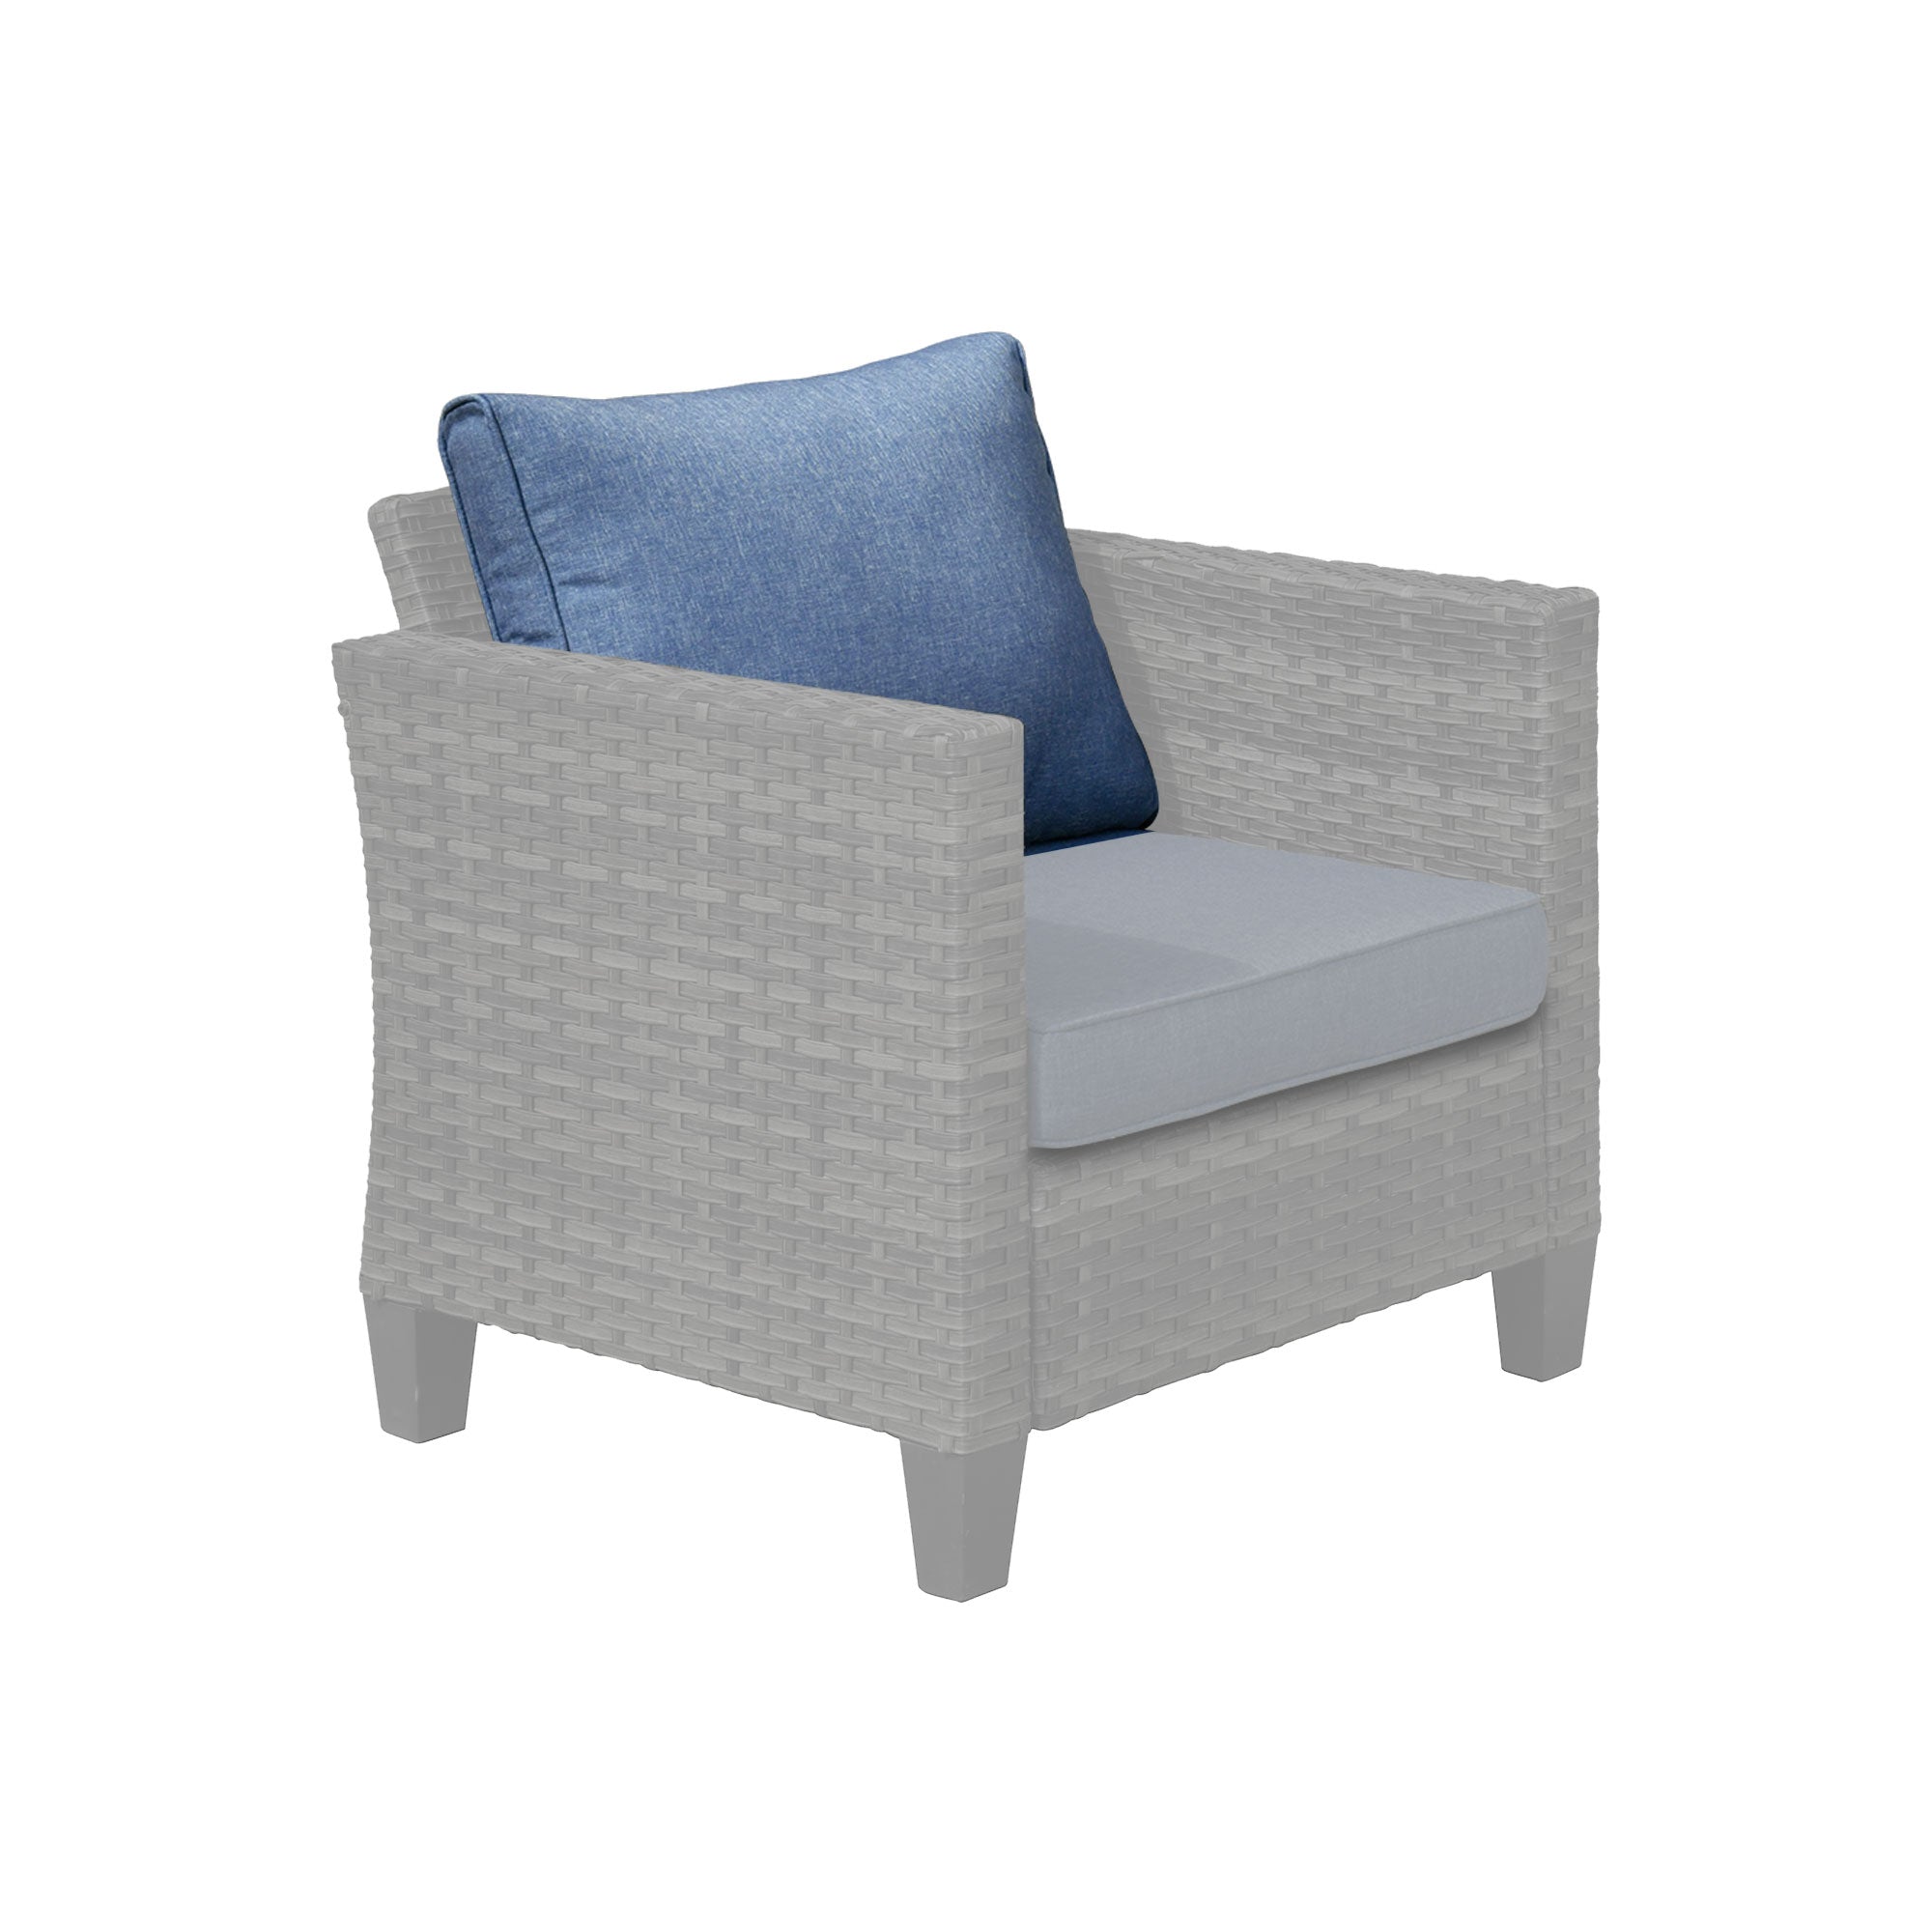 #Color_Denim Blue|#Type_Chair/Loveseat:Back Cushion